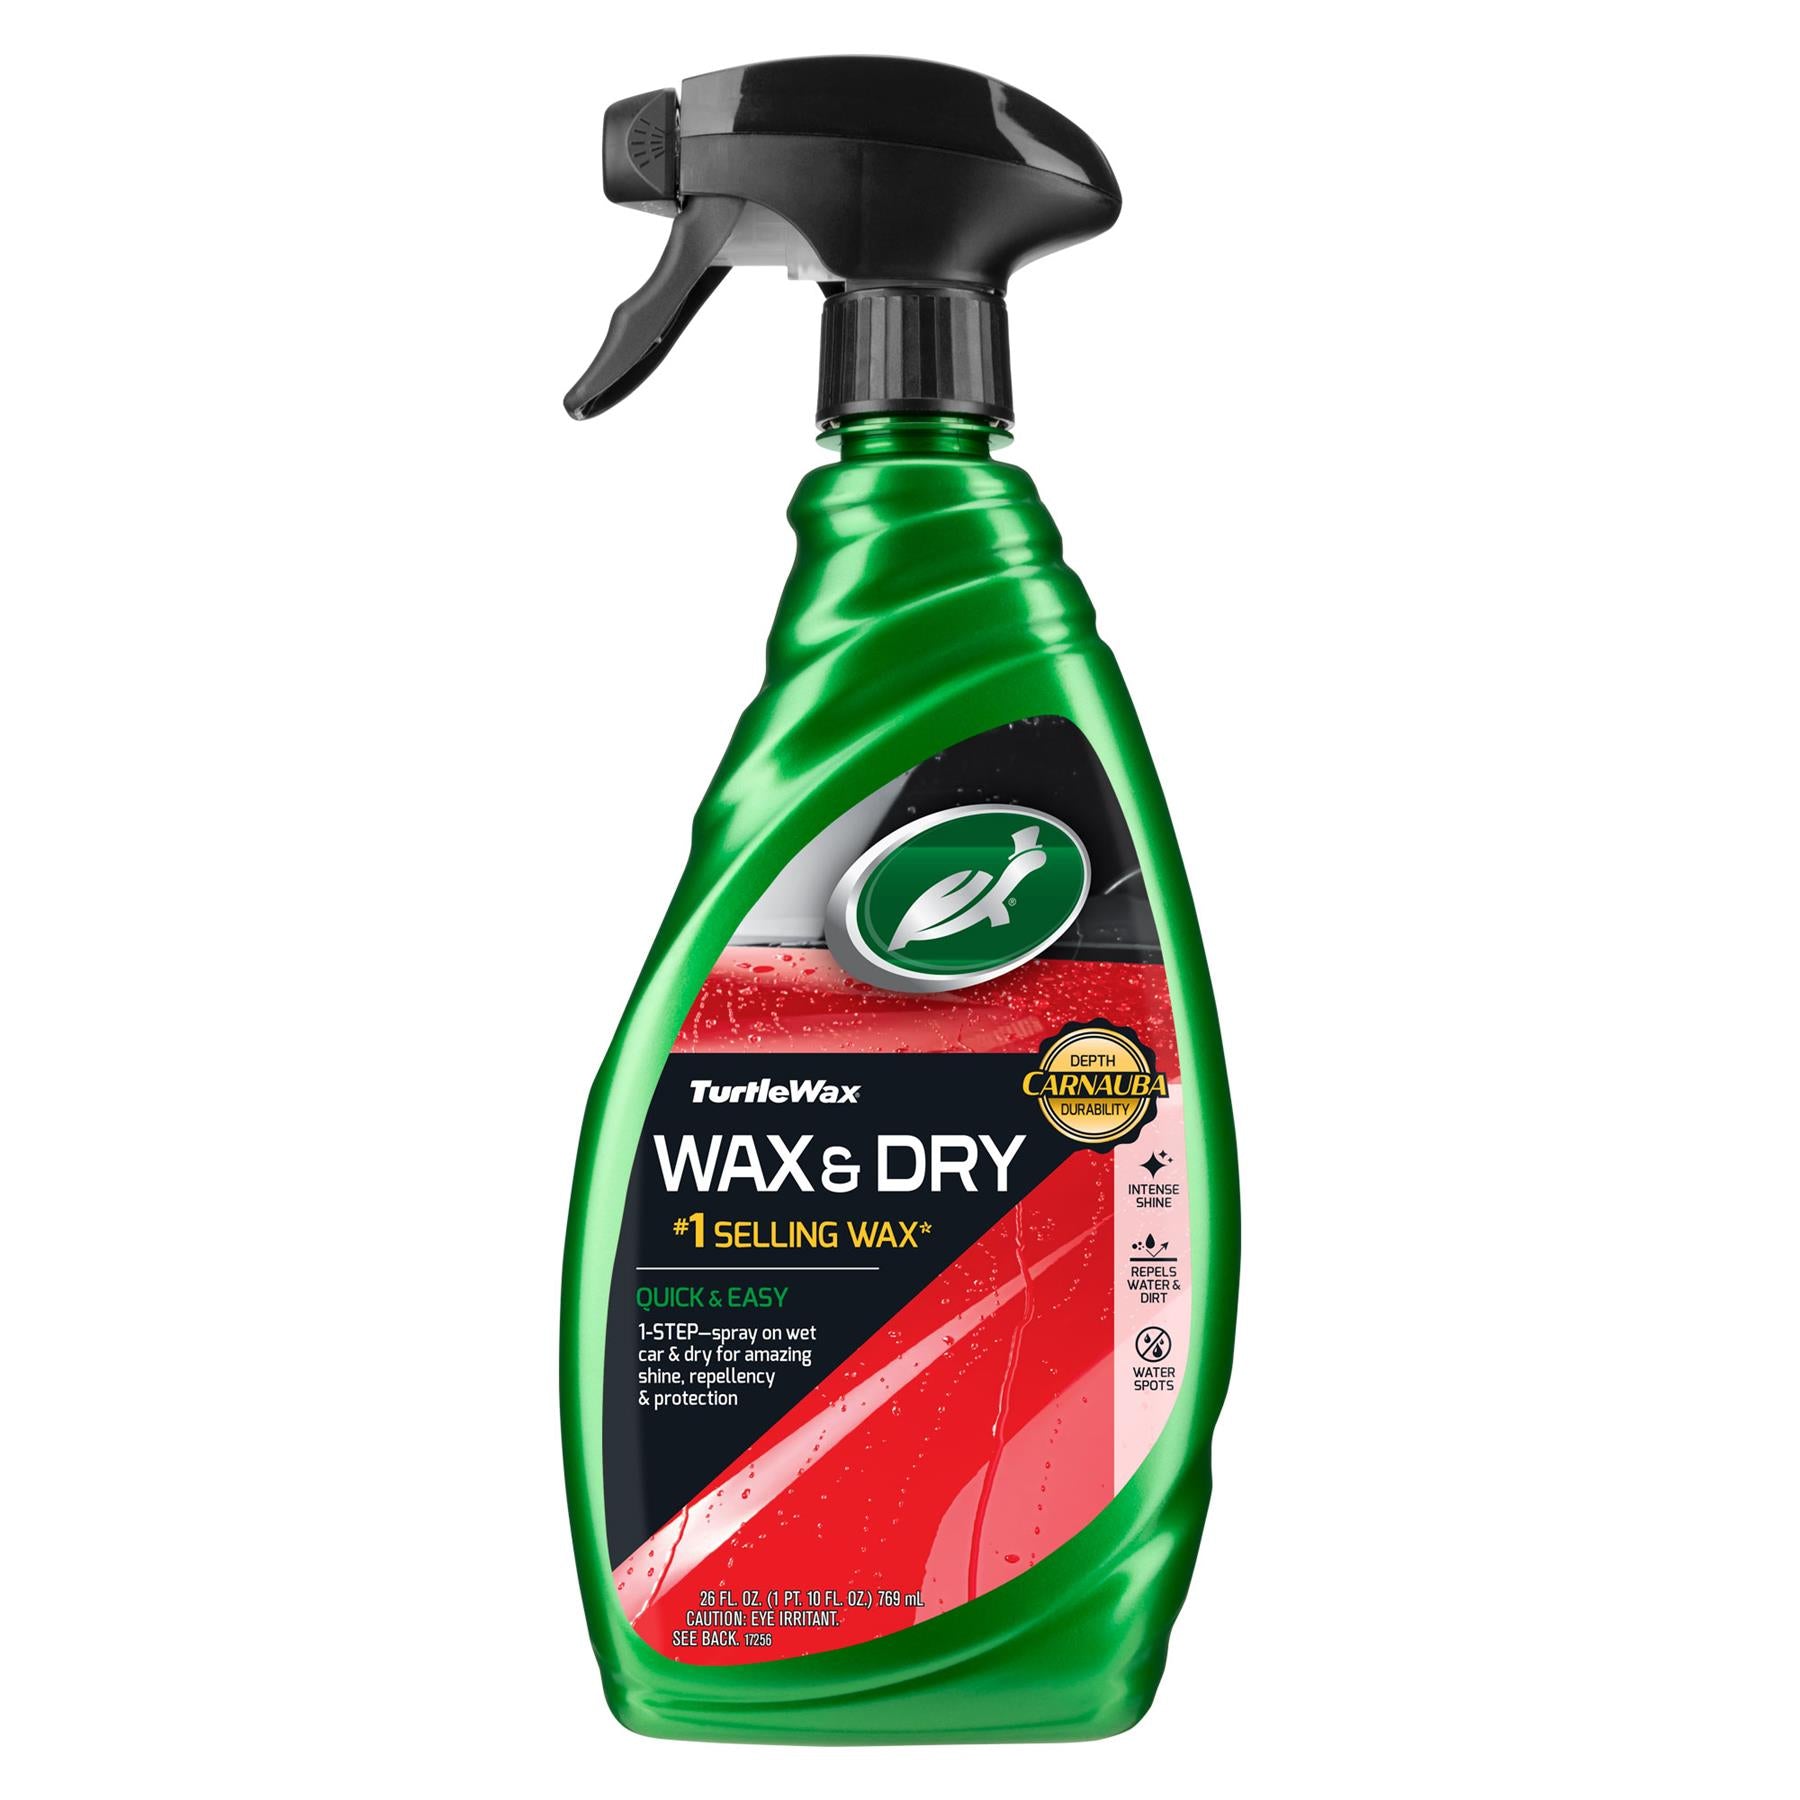 Image of Wax & Dry Spray Car Wax